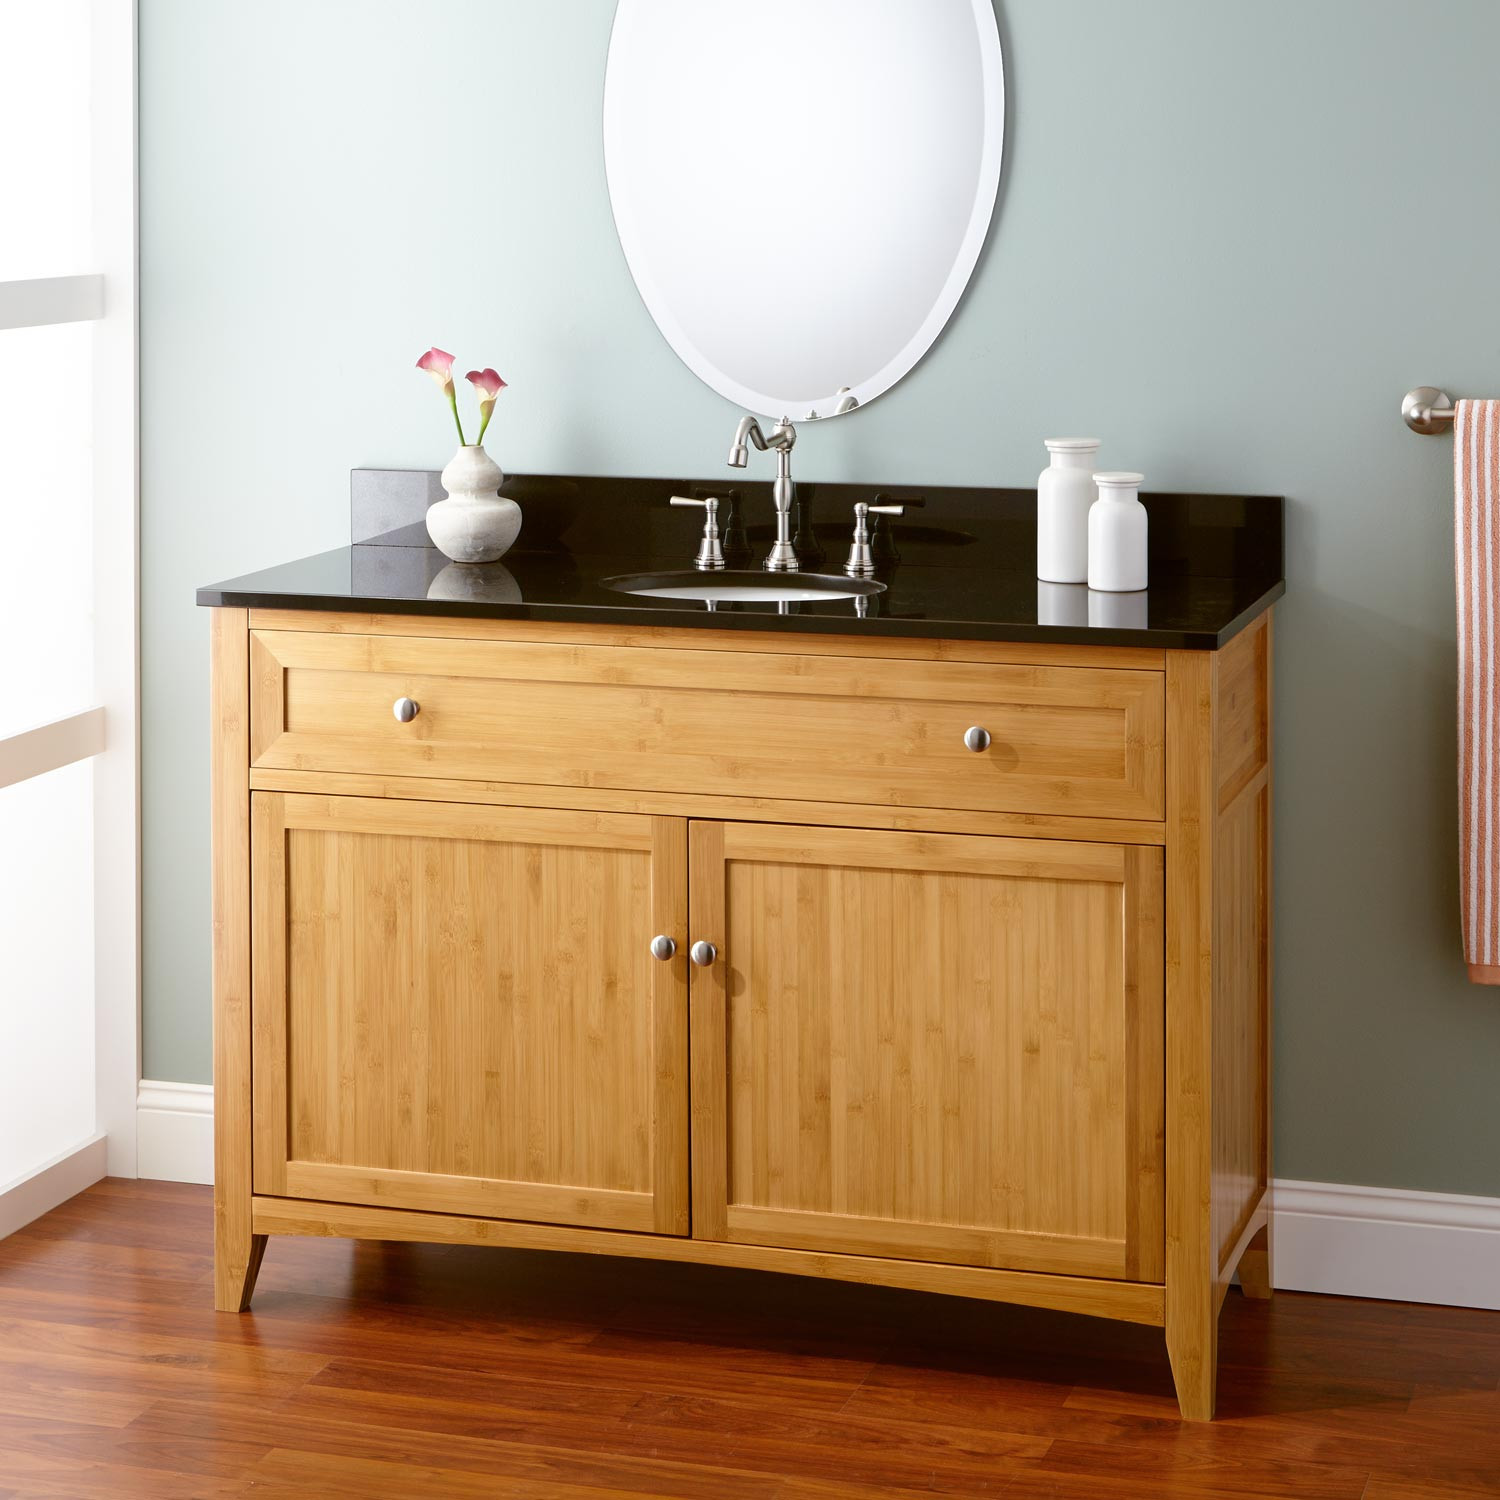 Narrow Bathroom Sinks And Vanities
 48" Narrow Depth Halifax Bamboo Vanity for Undermount Sink